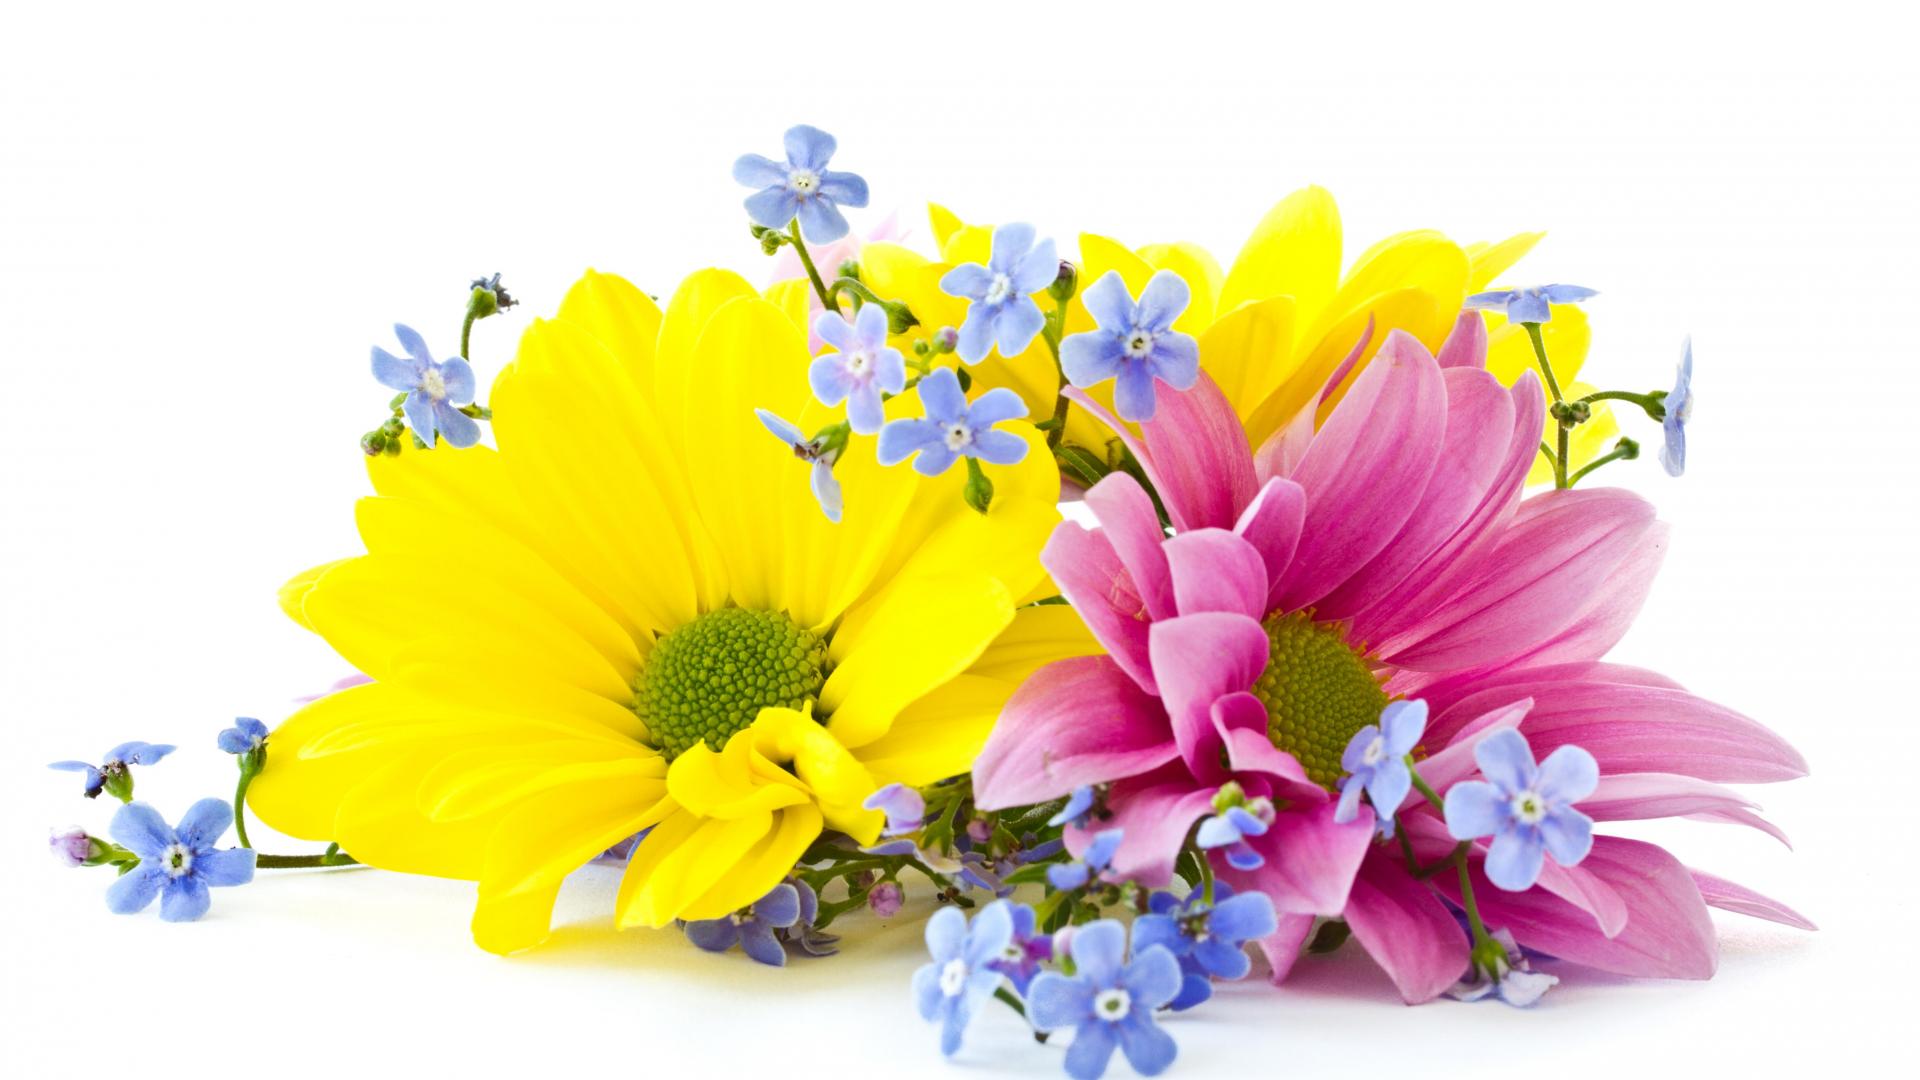 earth, chrysanthemum, blue flower, daisy, flower, nature, pink flower, spring, yellow flower, flowers